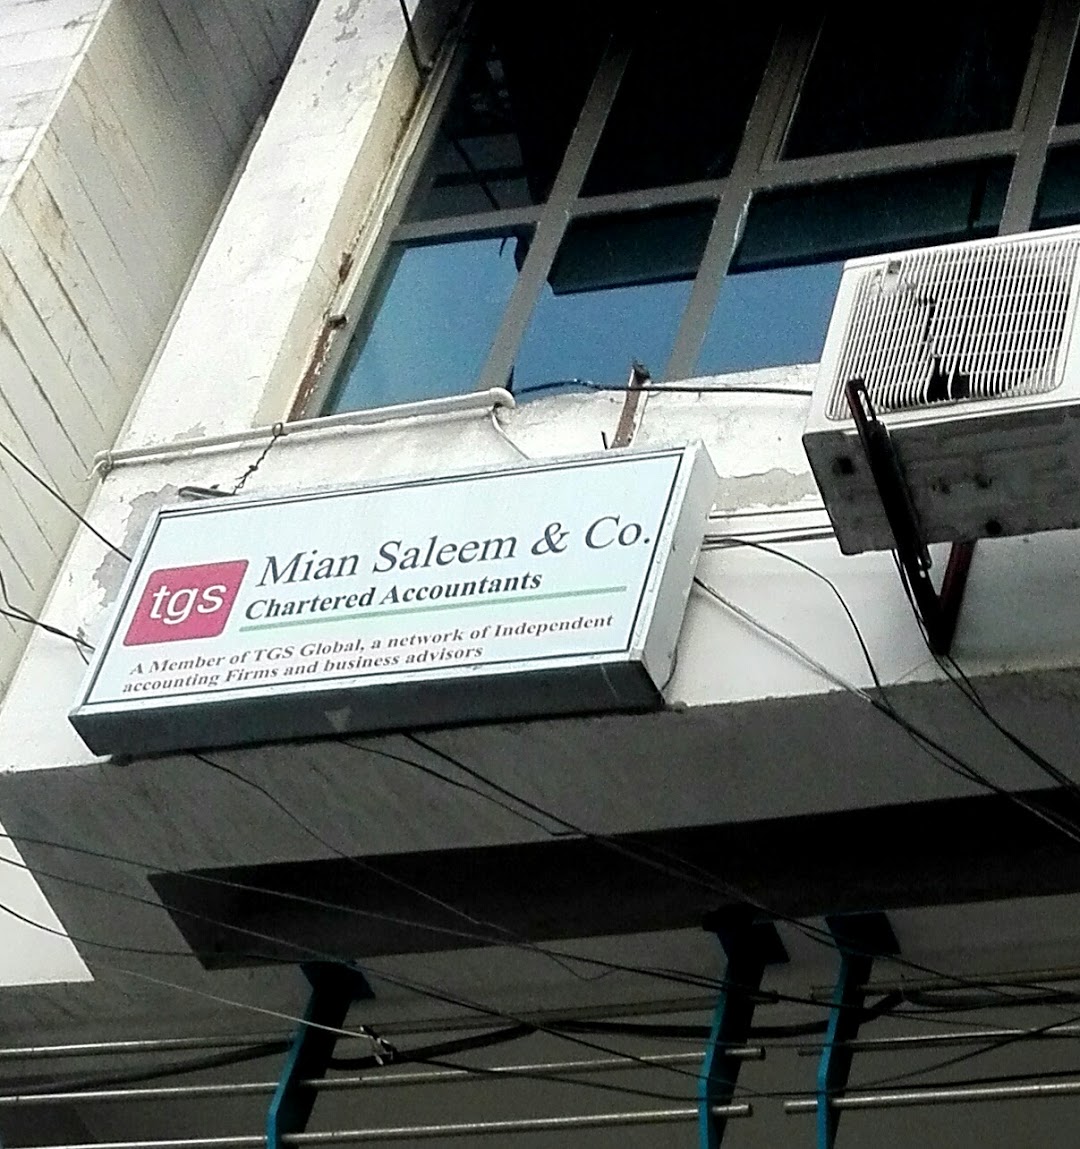 Main Saleem & Co. Chartered accountants